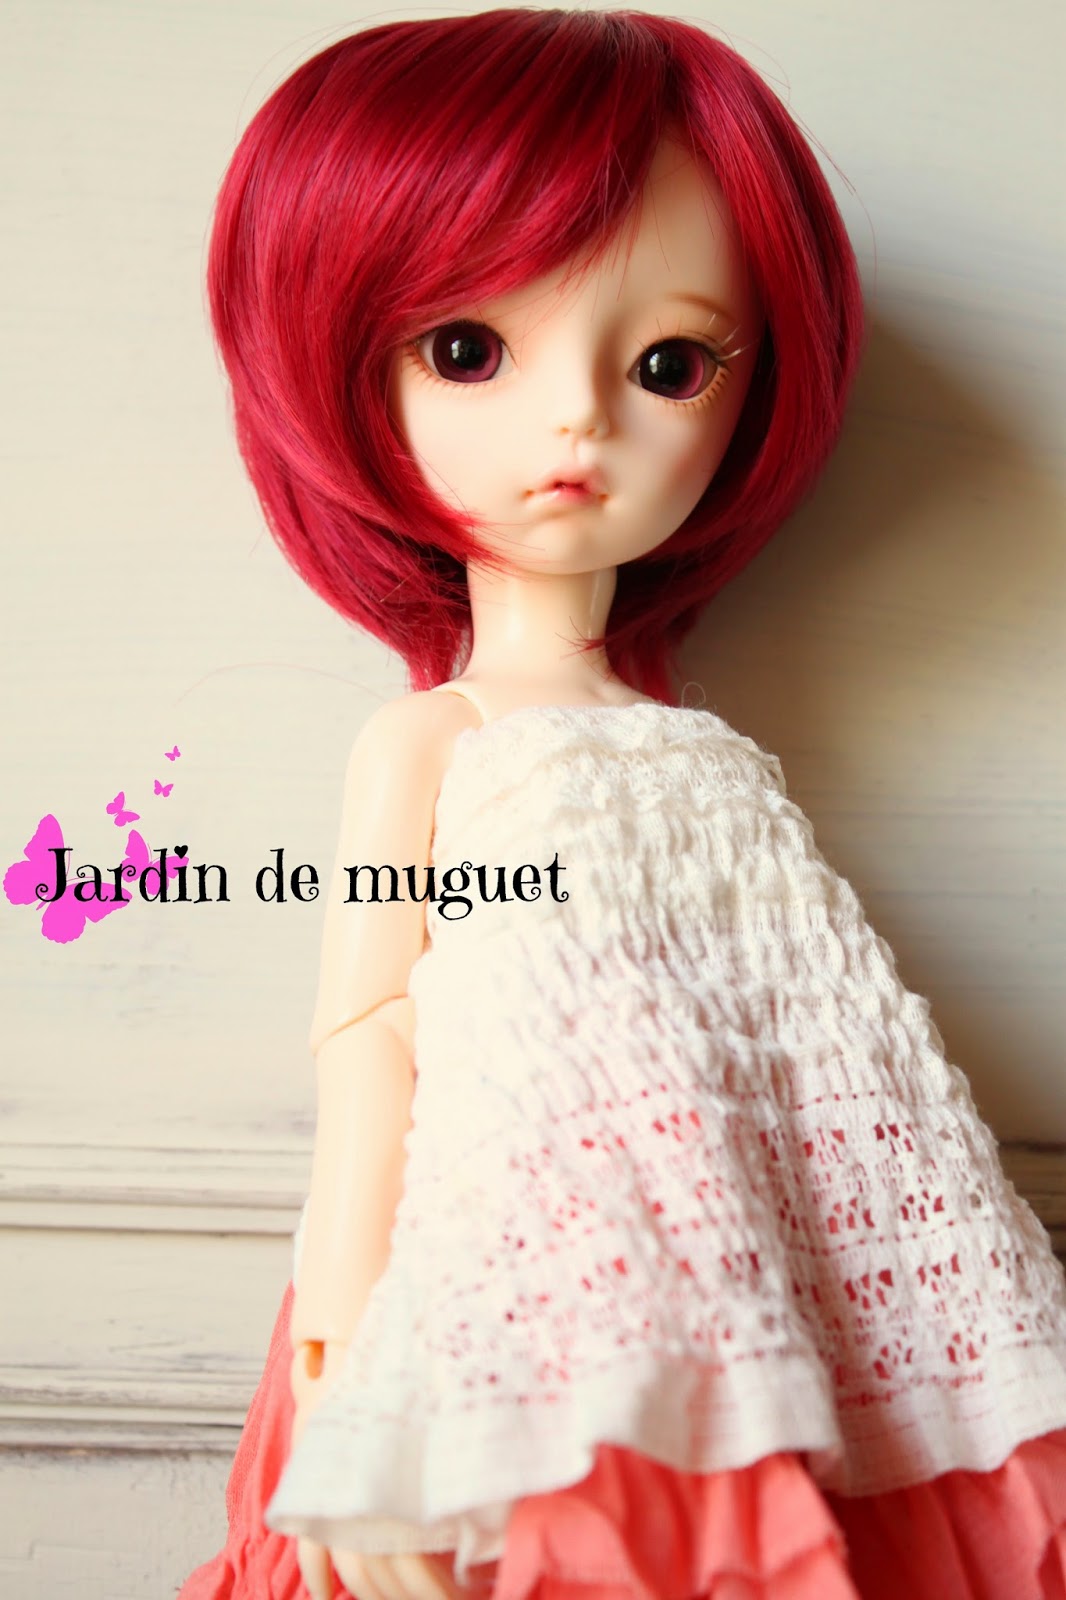 iMda doll 3.0 Gianお迎え|Jardin de muguet